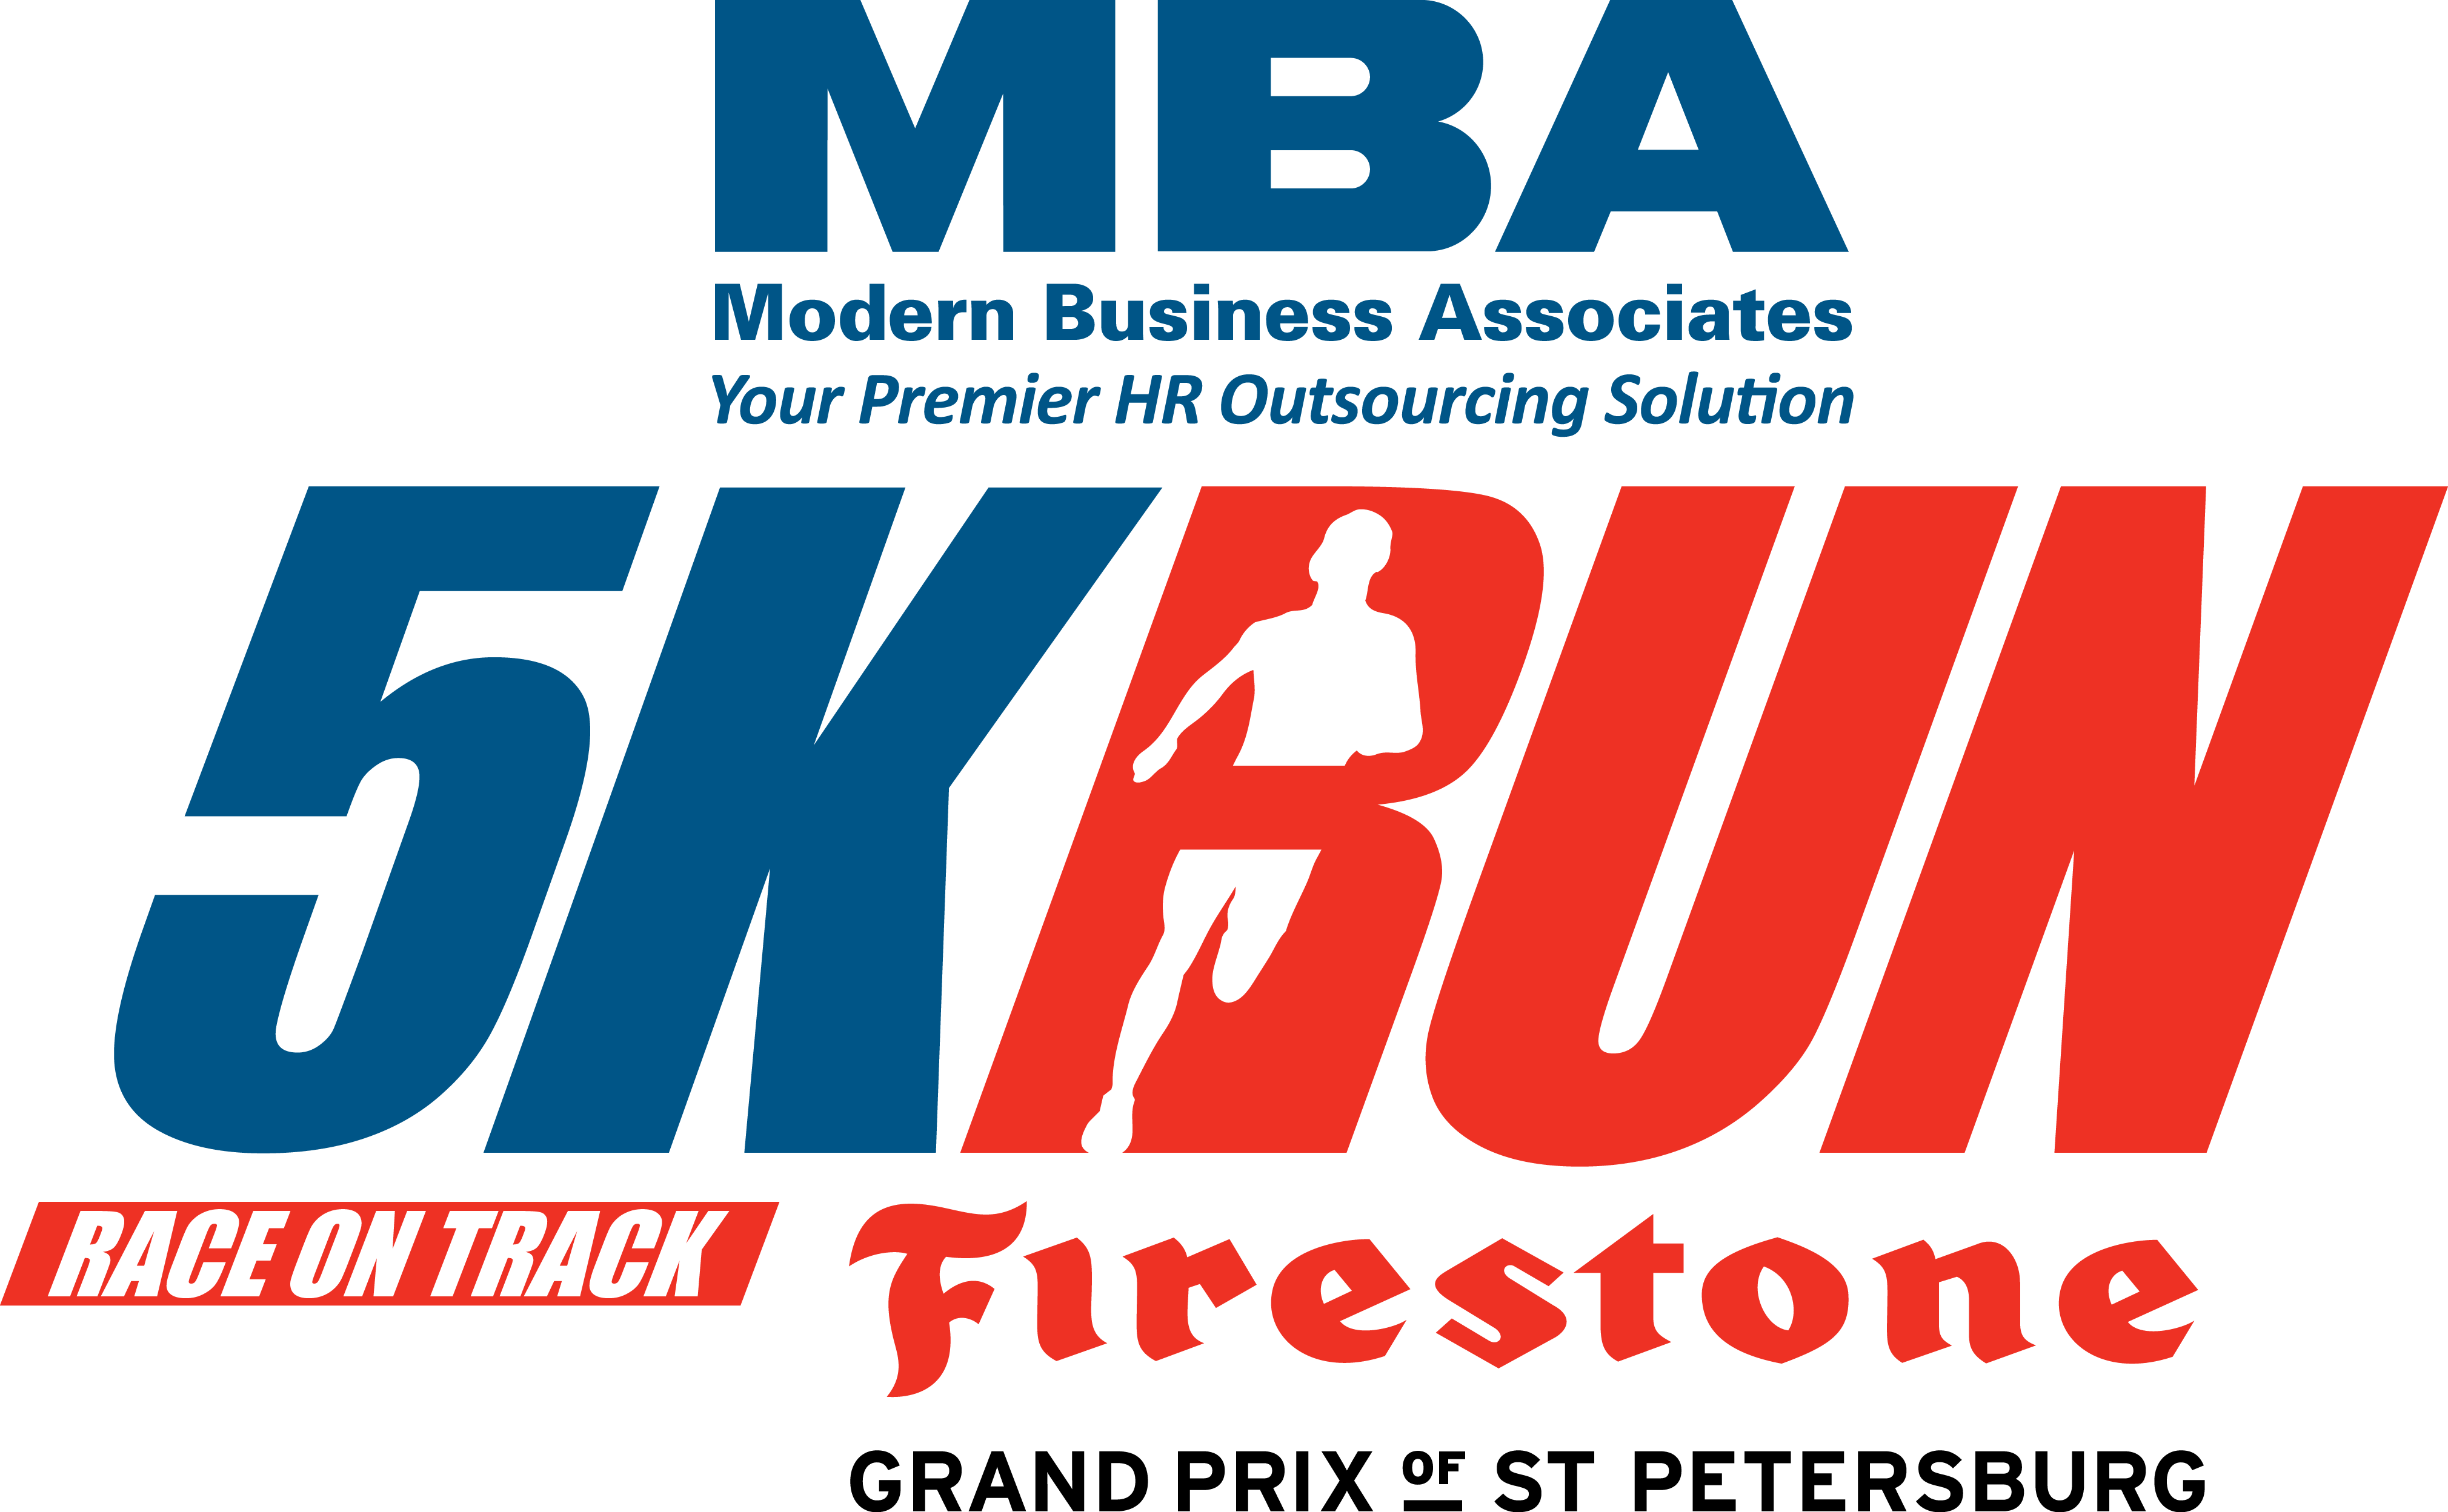 MBA 5K Run on the Firestone Grand Prix of St. Petersburg track logo